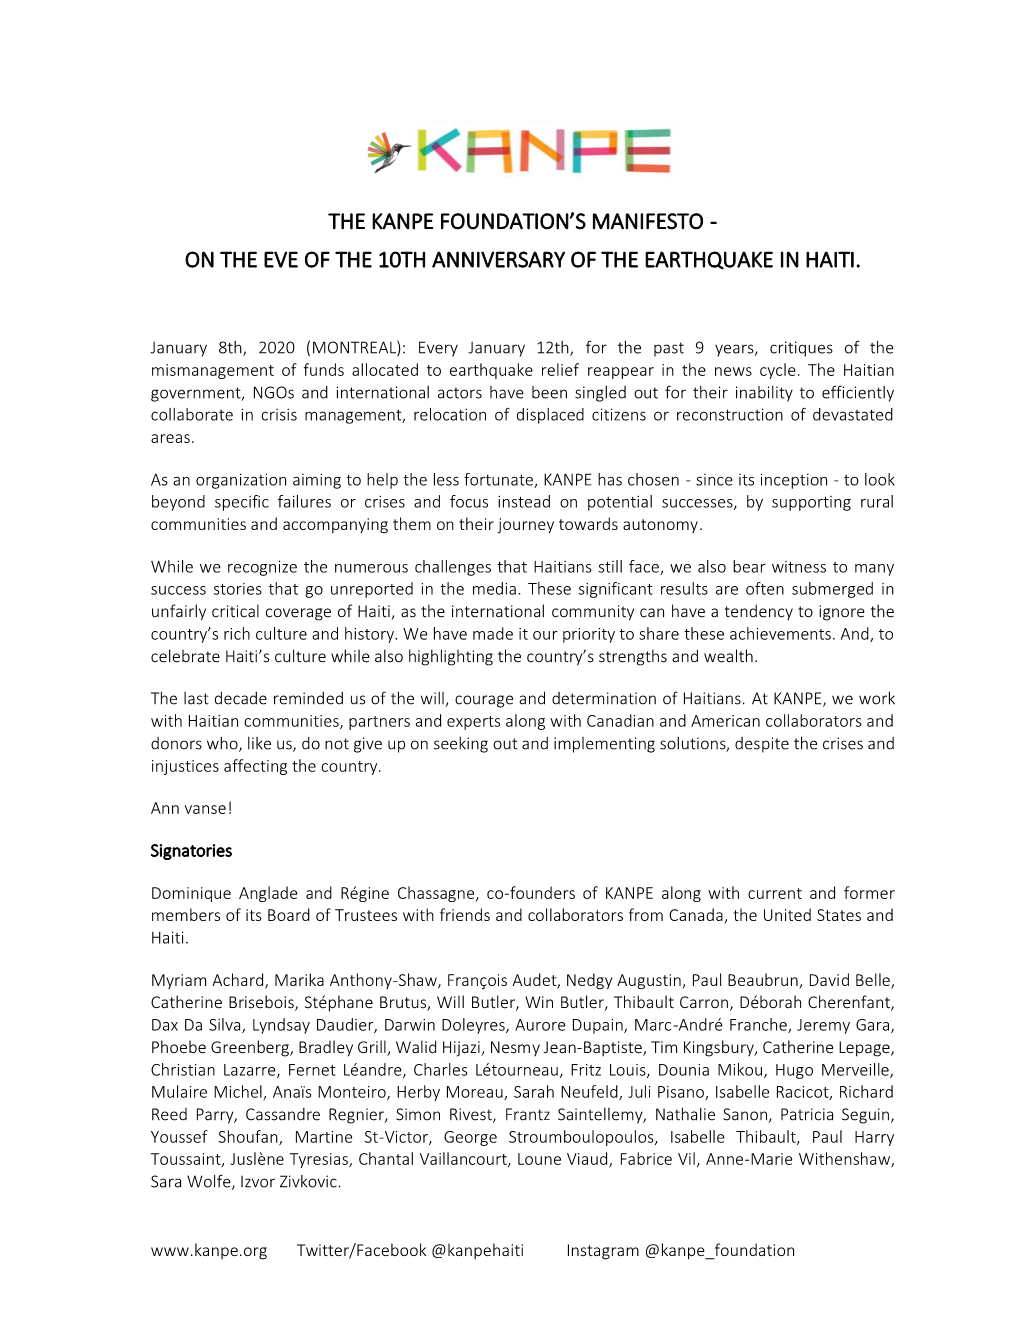 The Kanpe Foundation's Manifesto